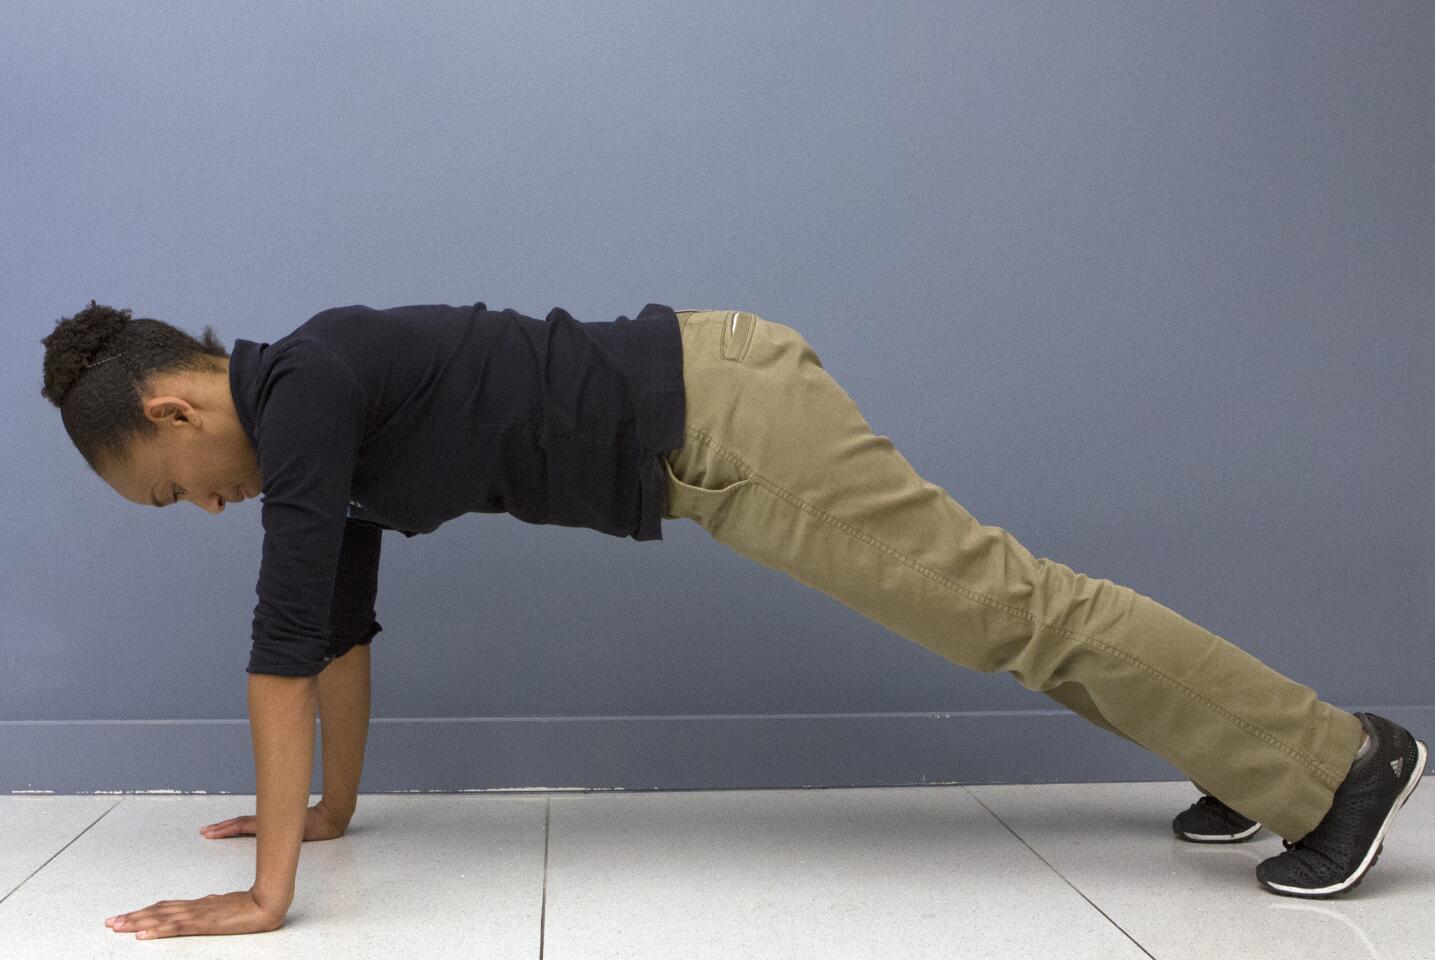 Plank exercises